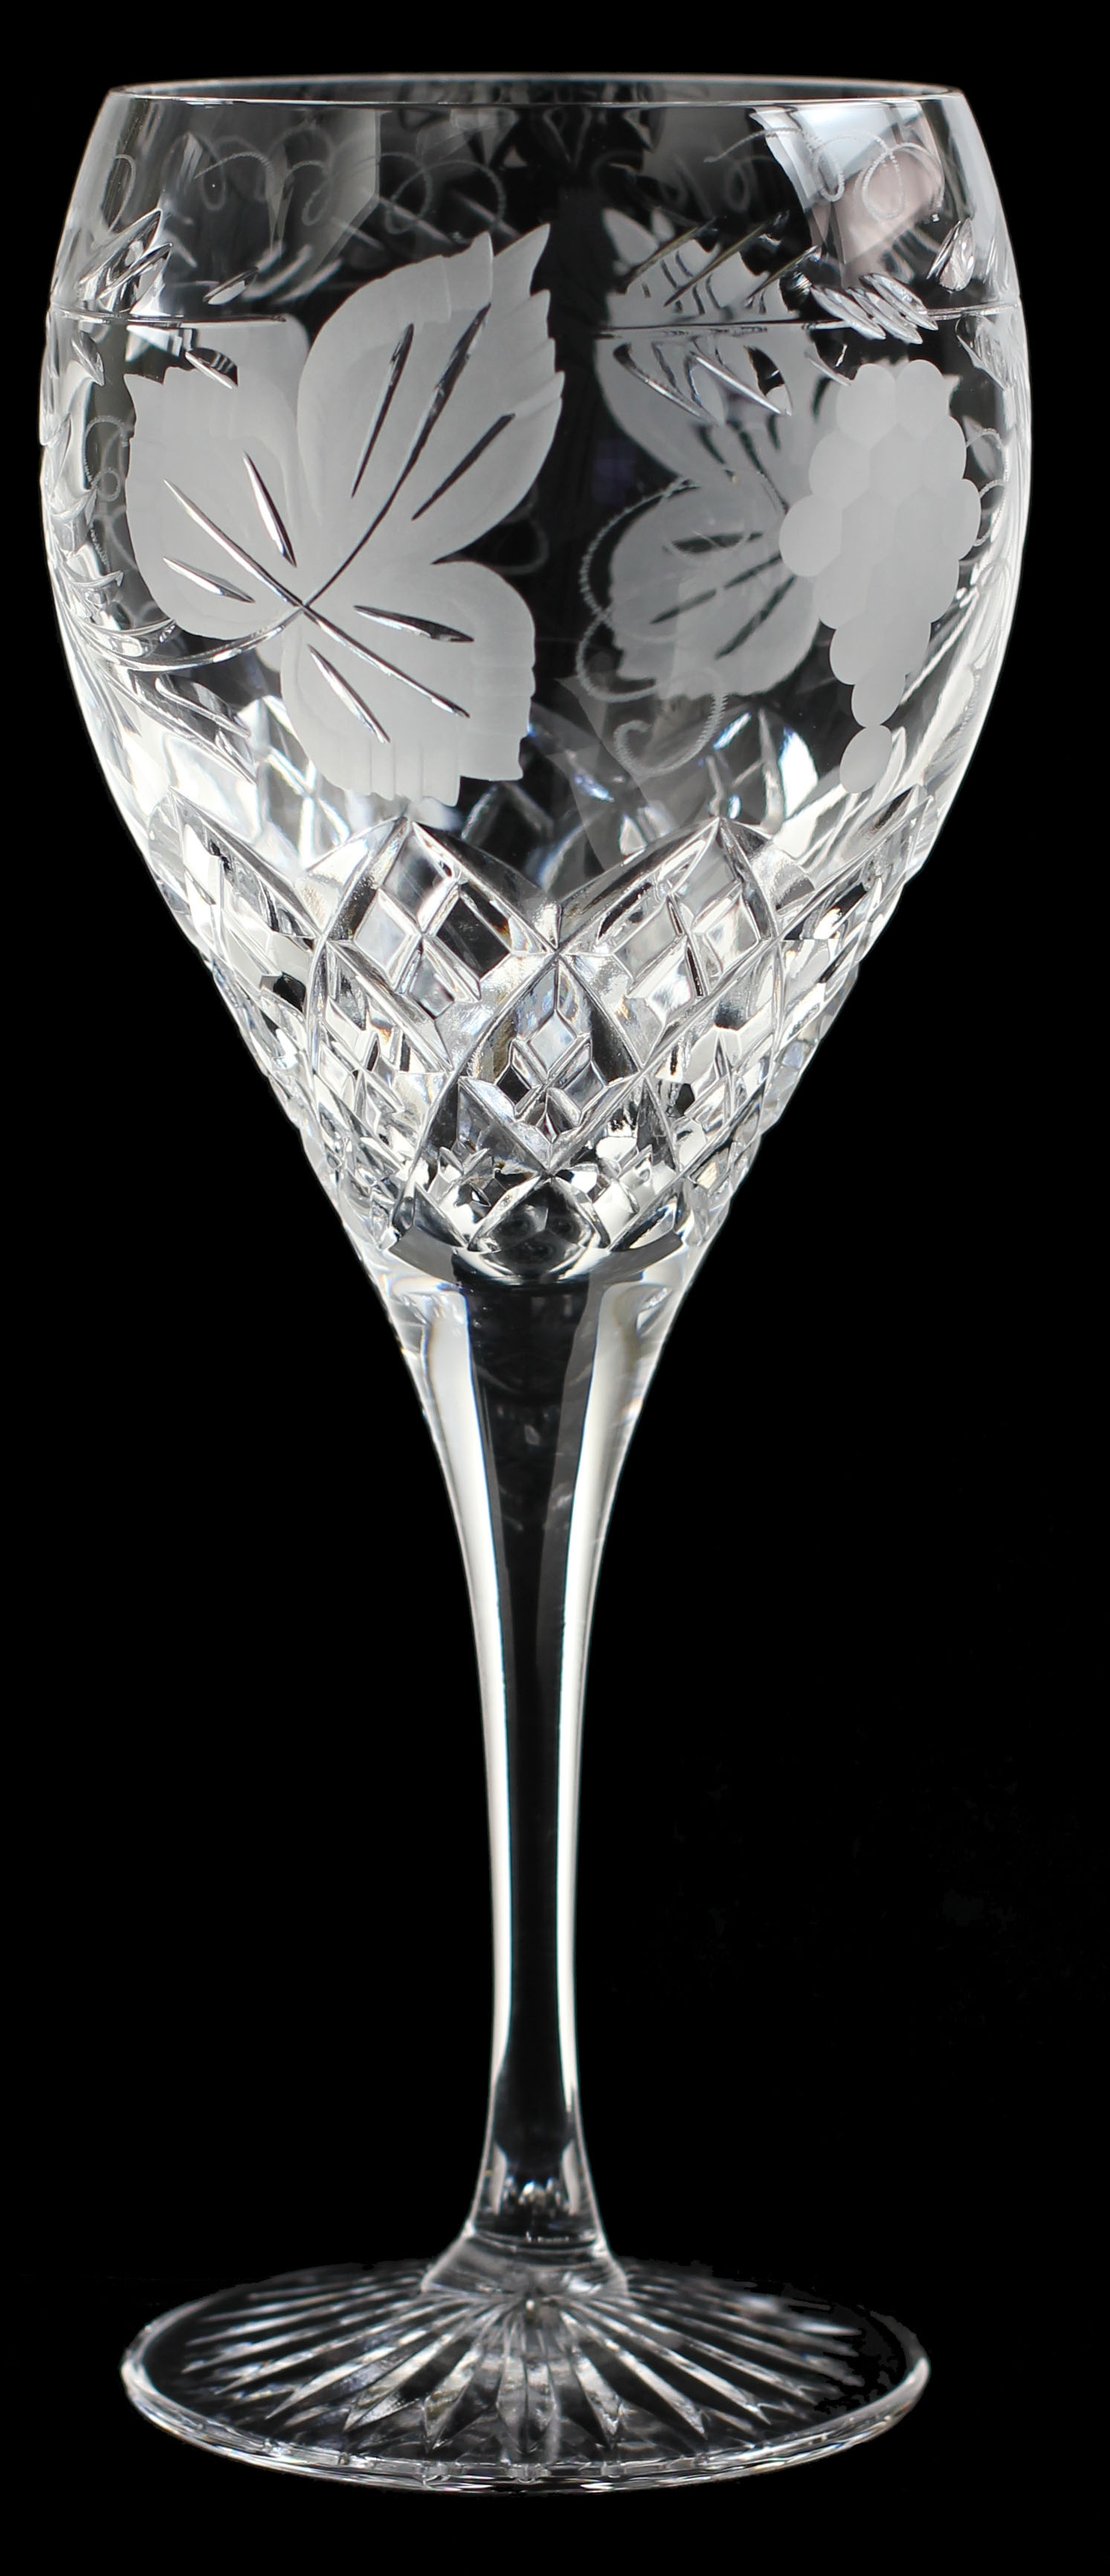 Handmade full lead crystal wine glass/goblet in our Grapevine design